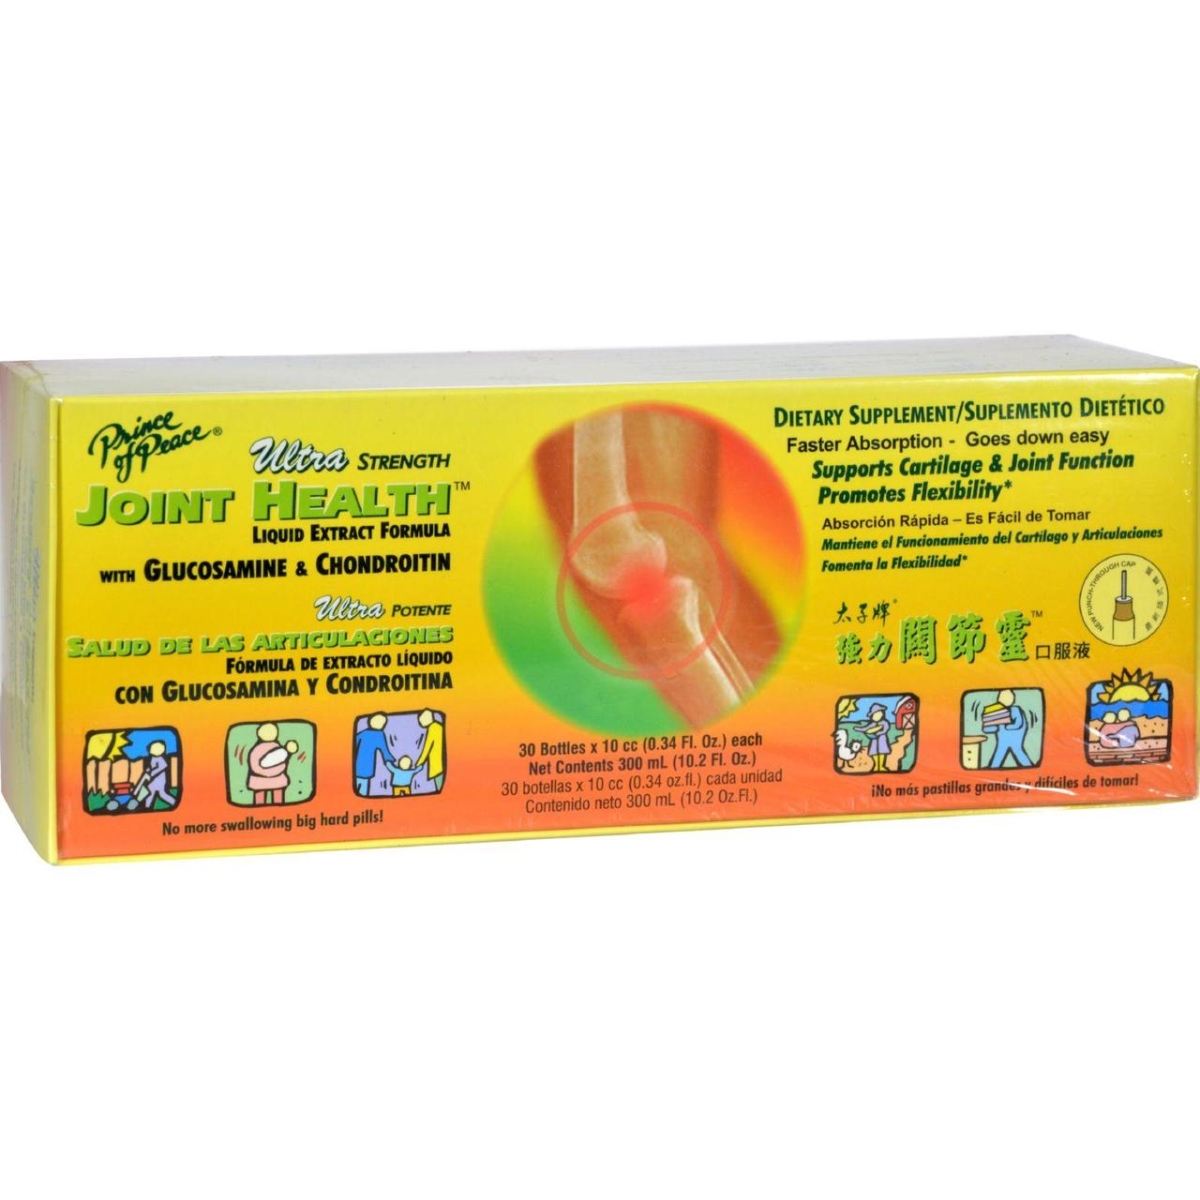 Hg0348060 Ultra Joint Health - 30 Vials